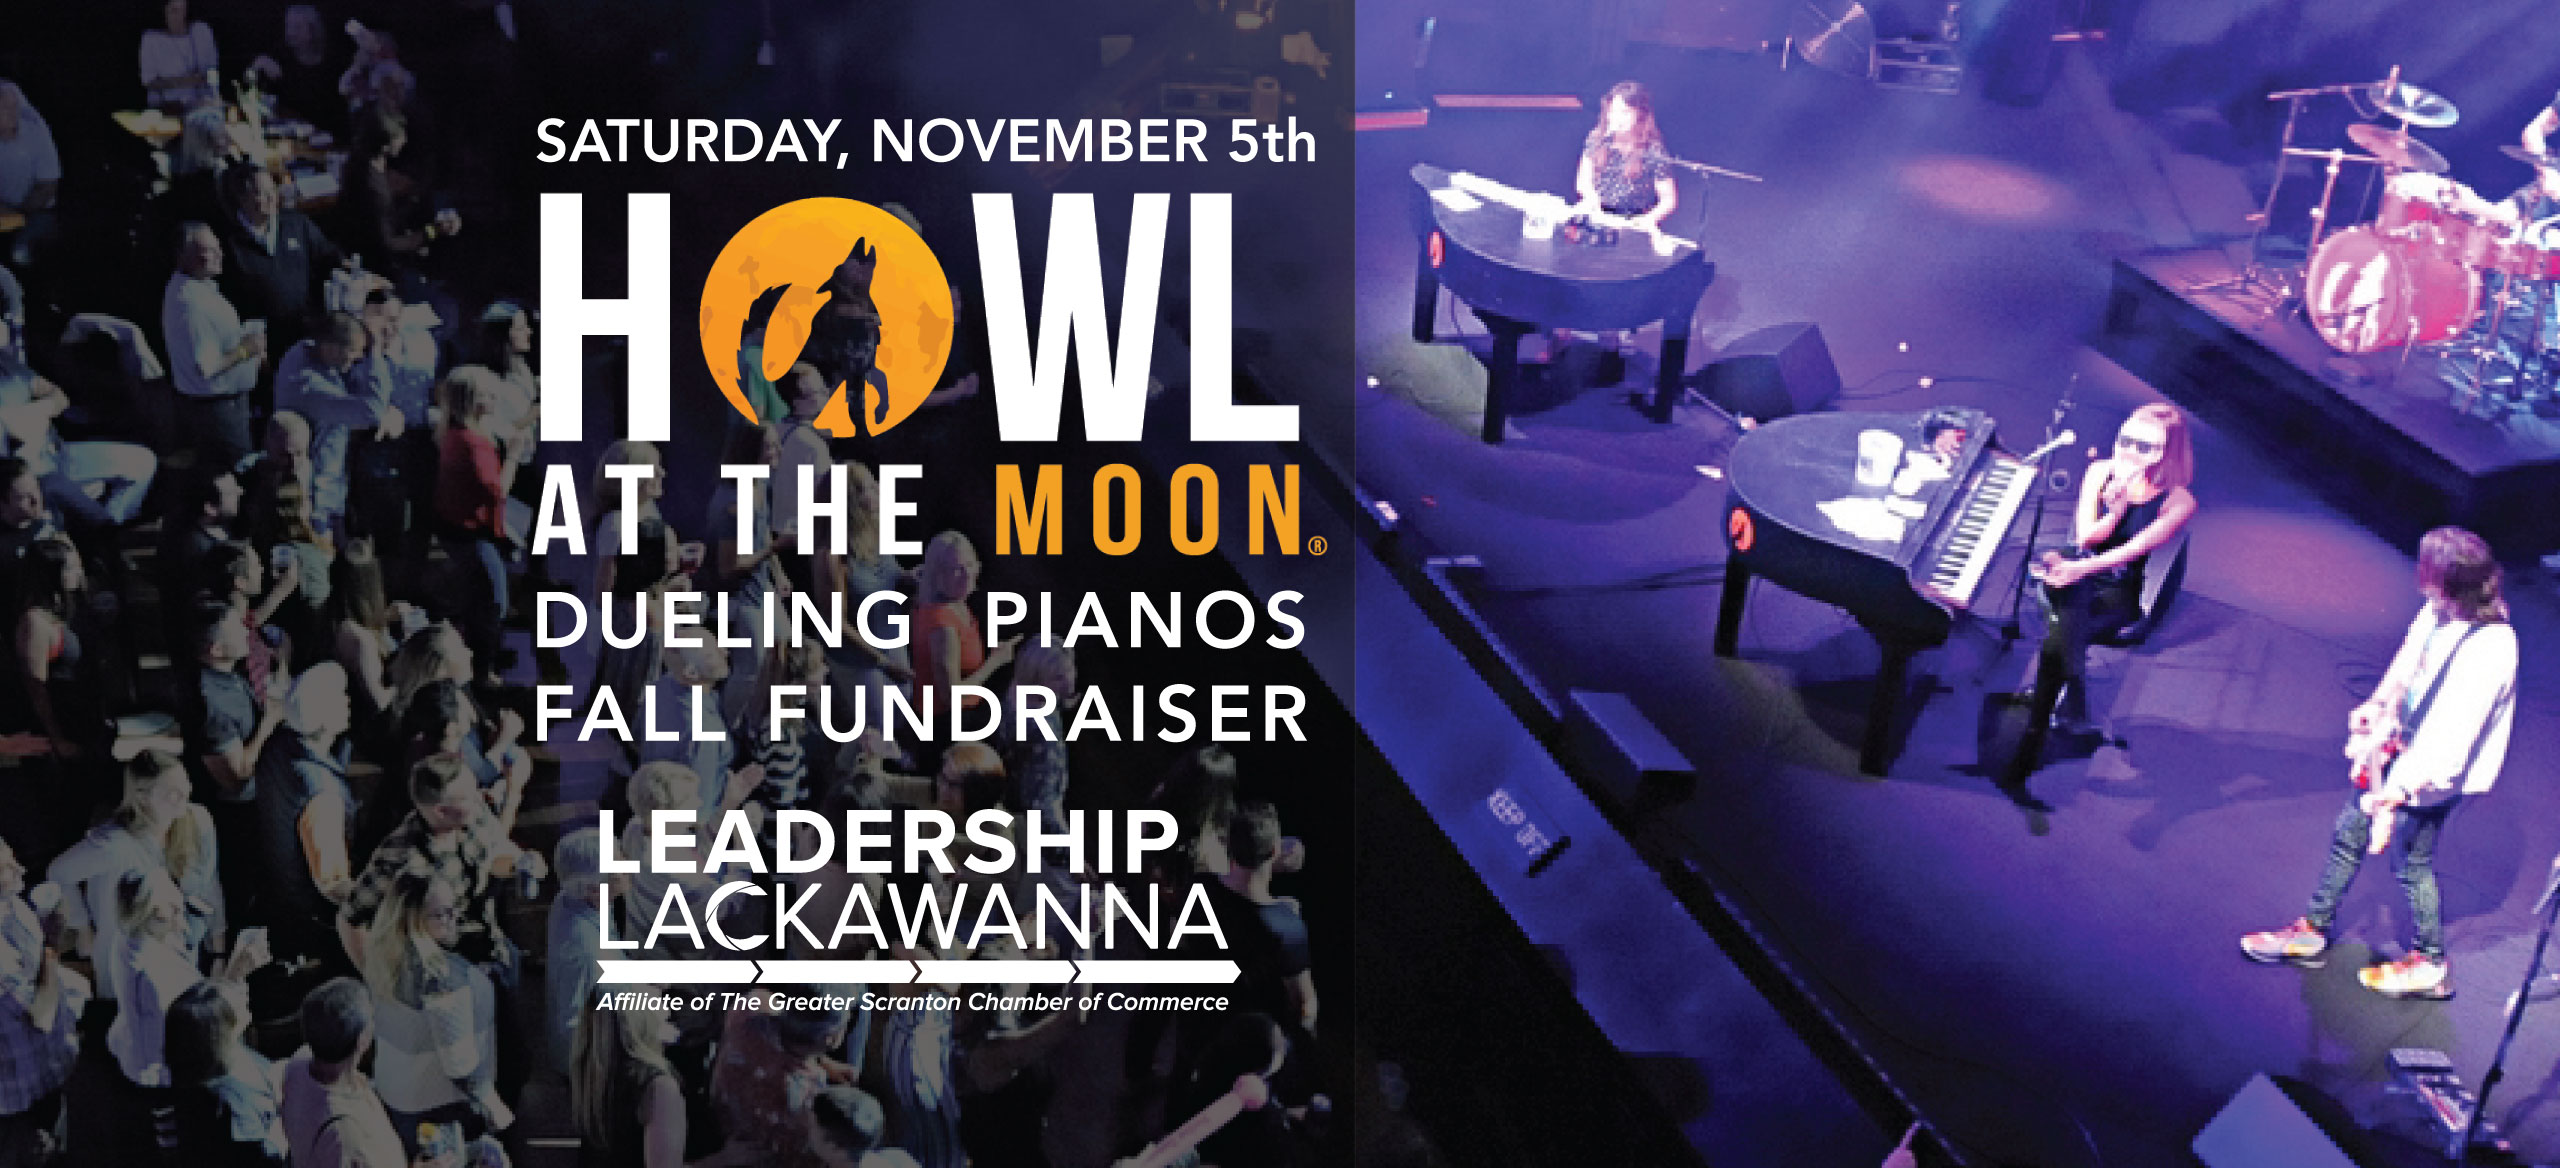 Leadership Lackawanna Dueling Pianos Fundraiser